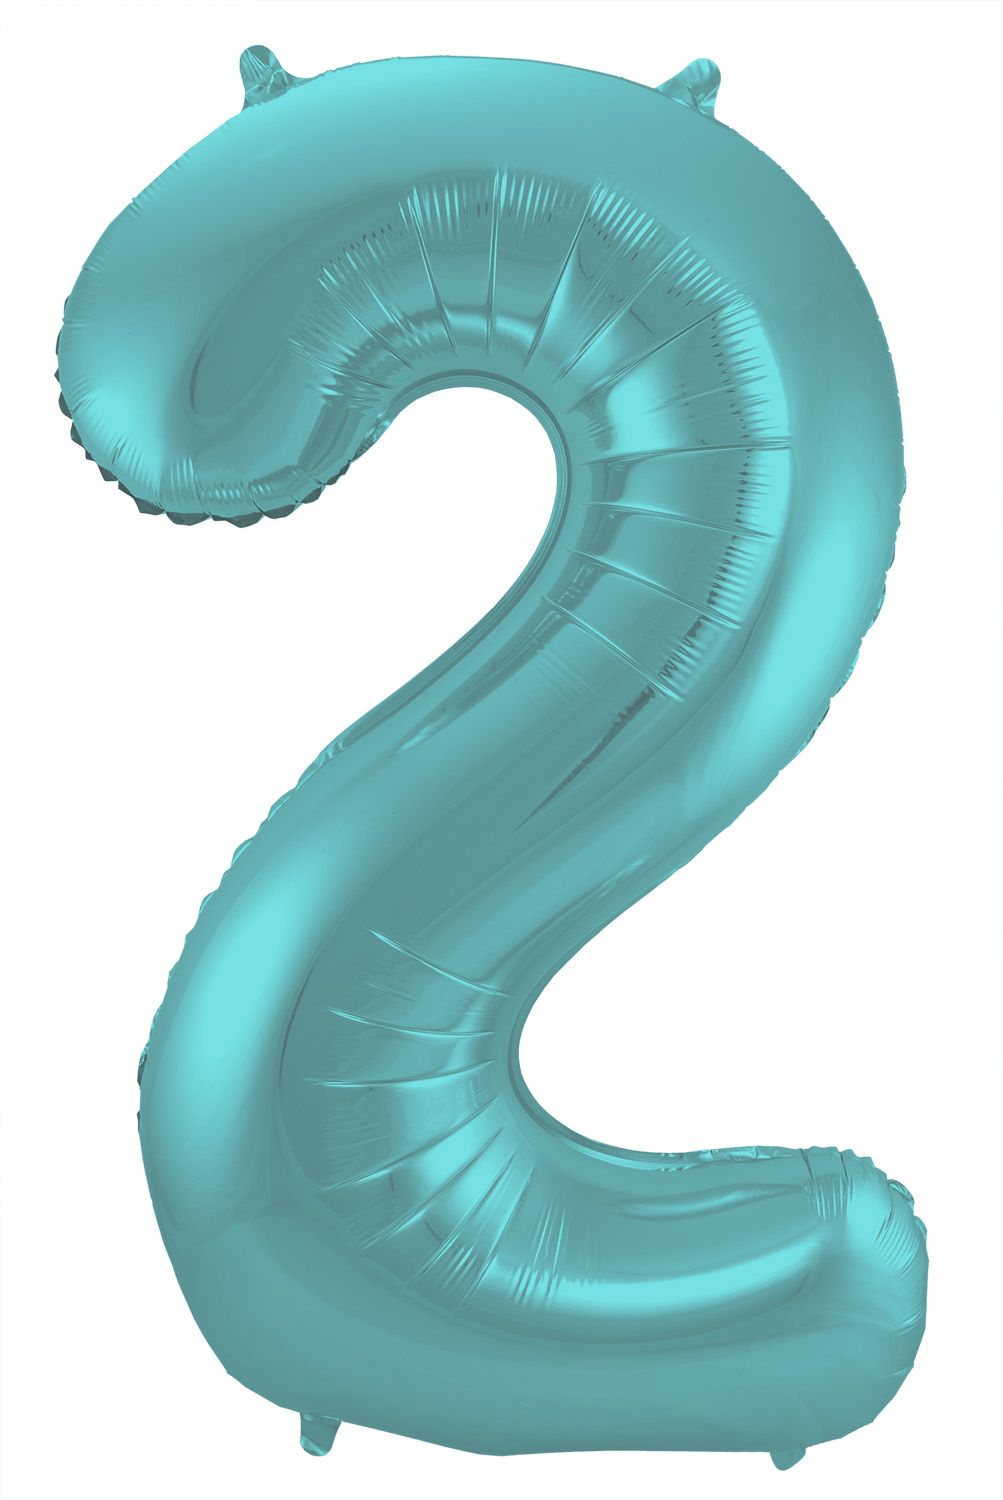 Cijfer 2 pastel aqua blauw folieballon 86cm